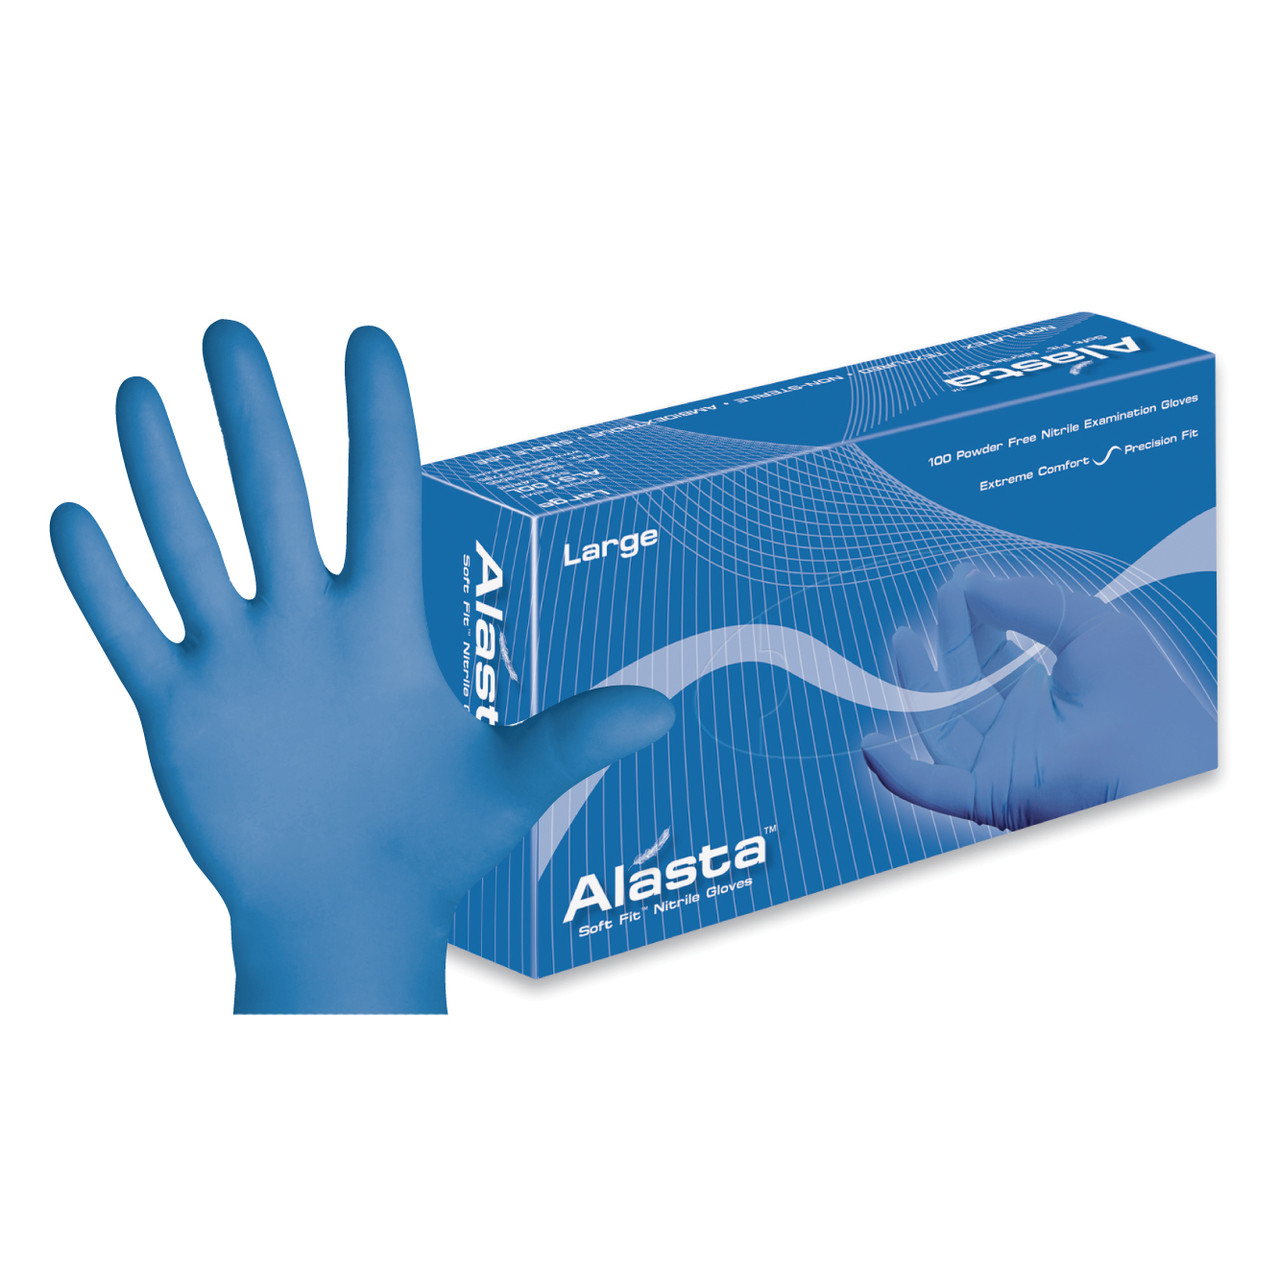 Dash Medical - Alasta Powder Free Nitrile Gloves - Medium